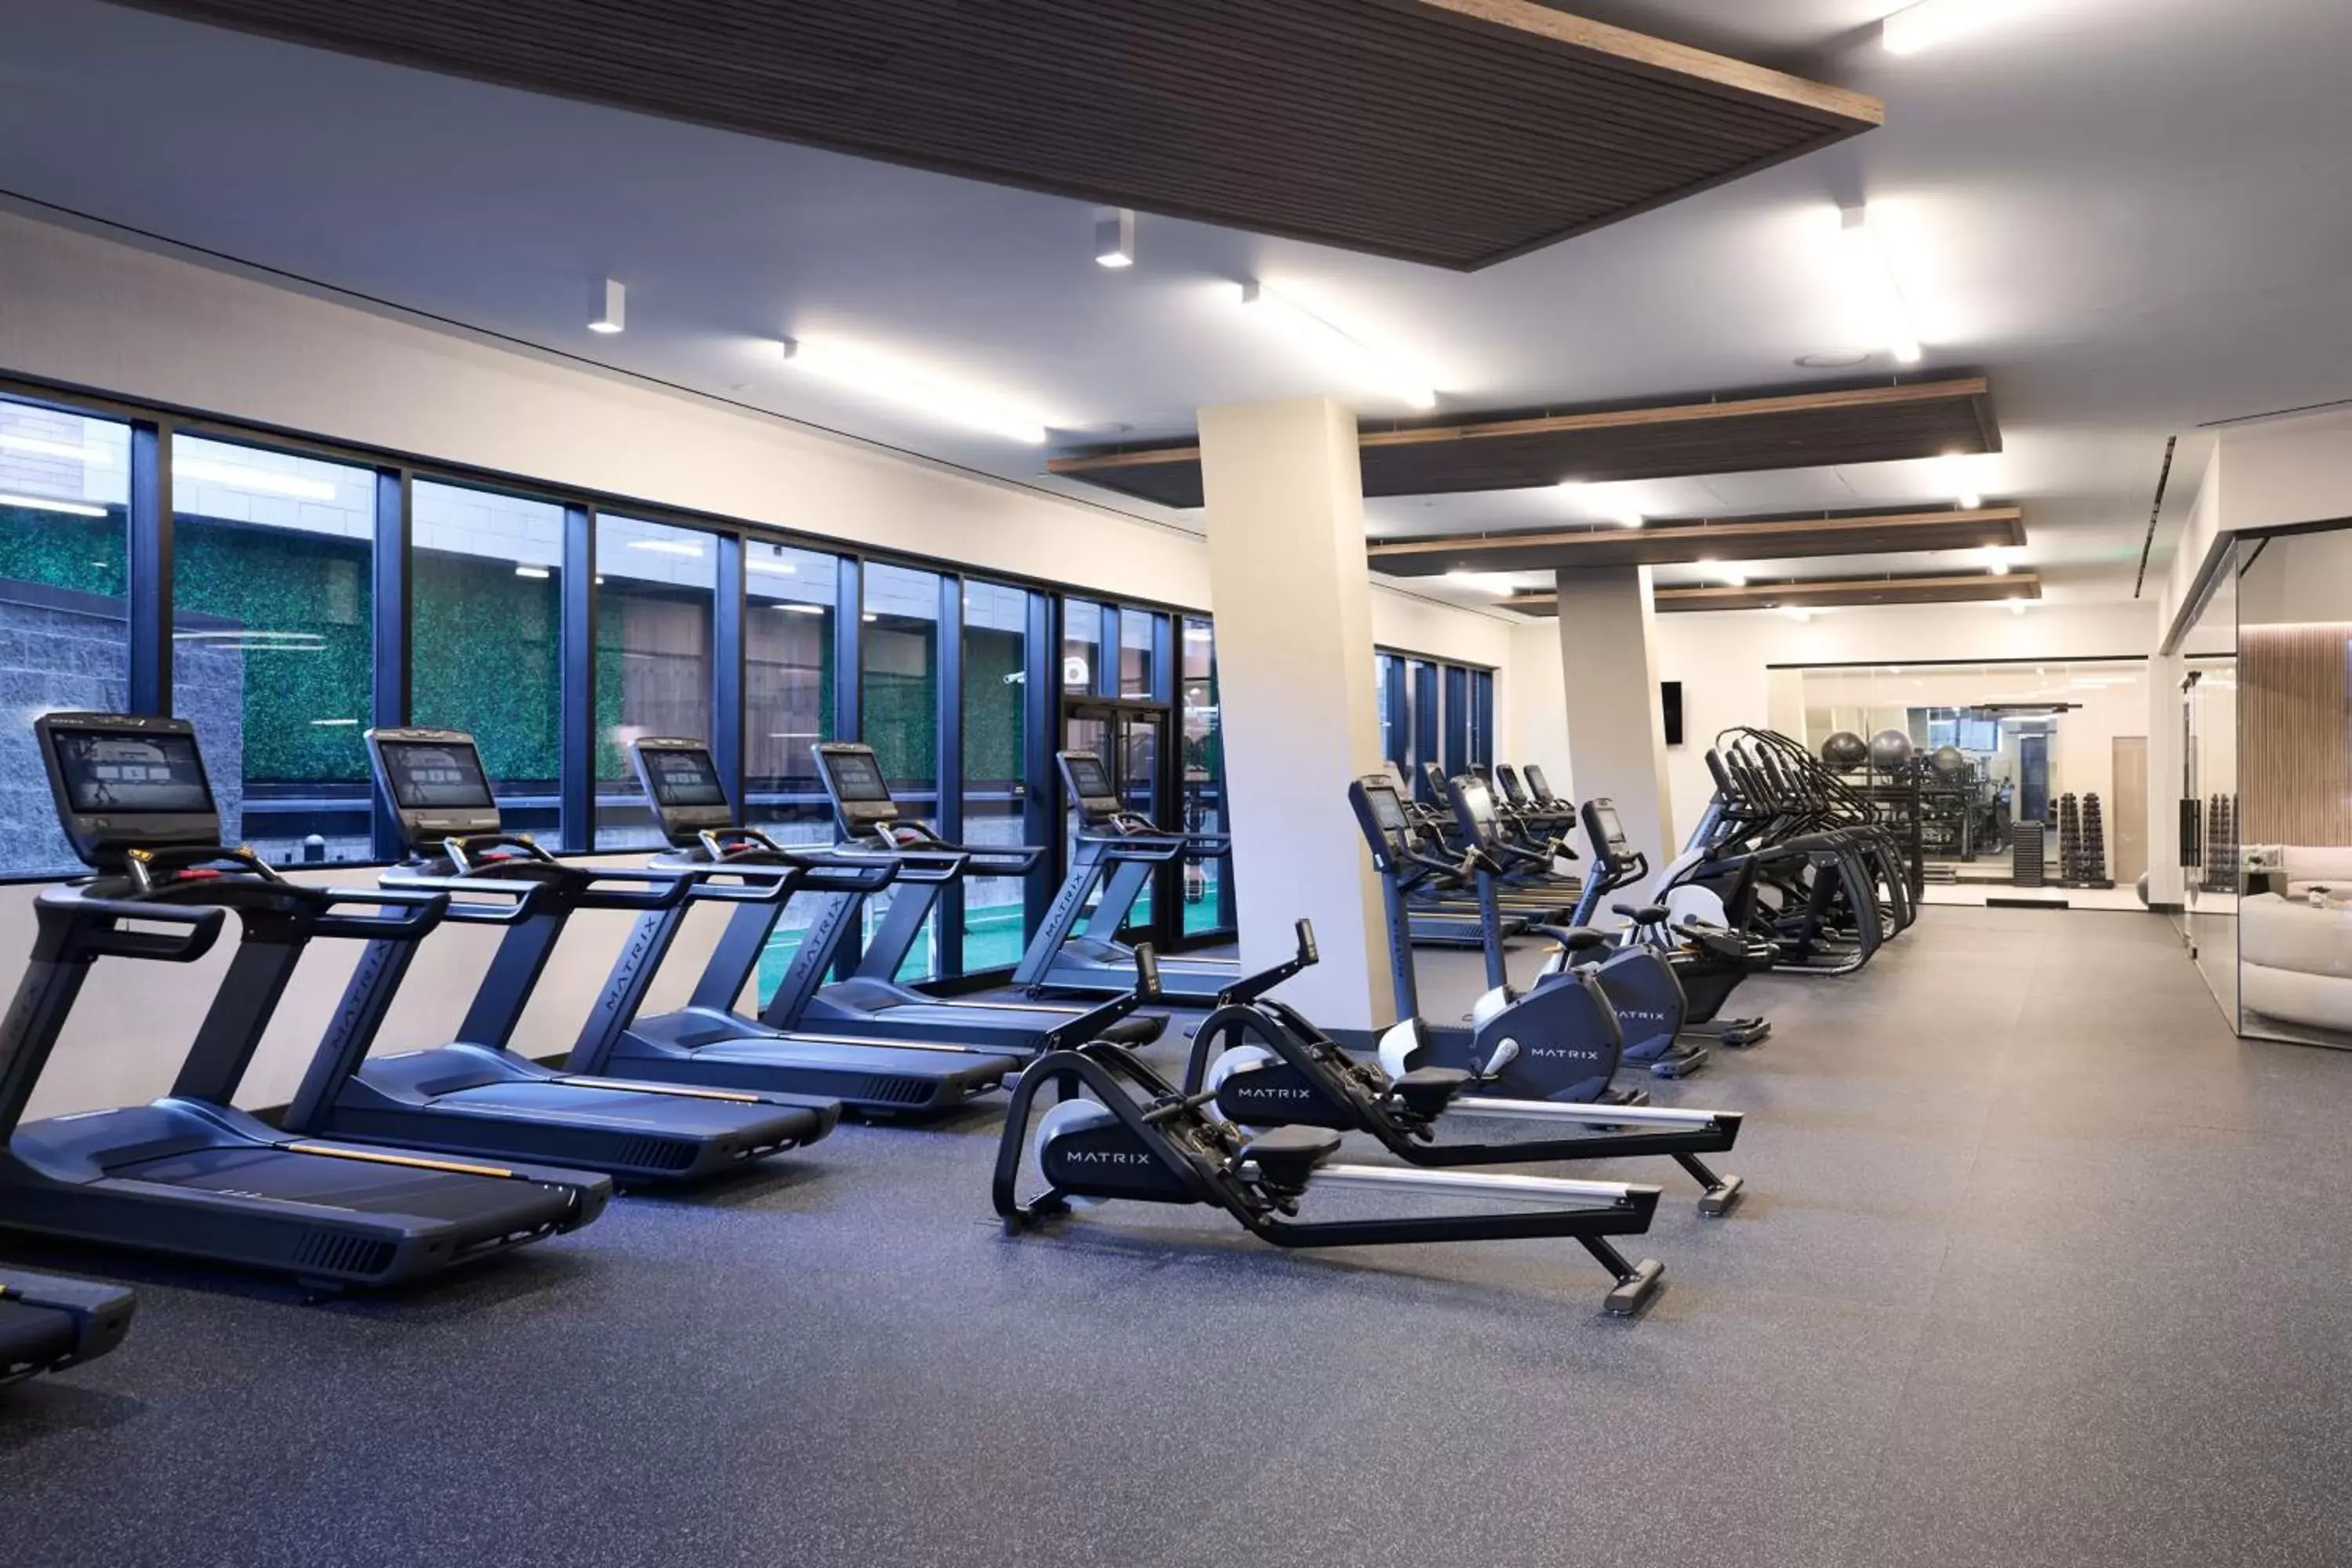 Fitness centre/facilities, Fitness Center/Facilities in Washington Marriott Capitol Hill